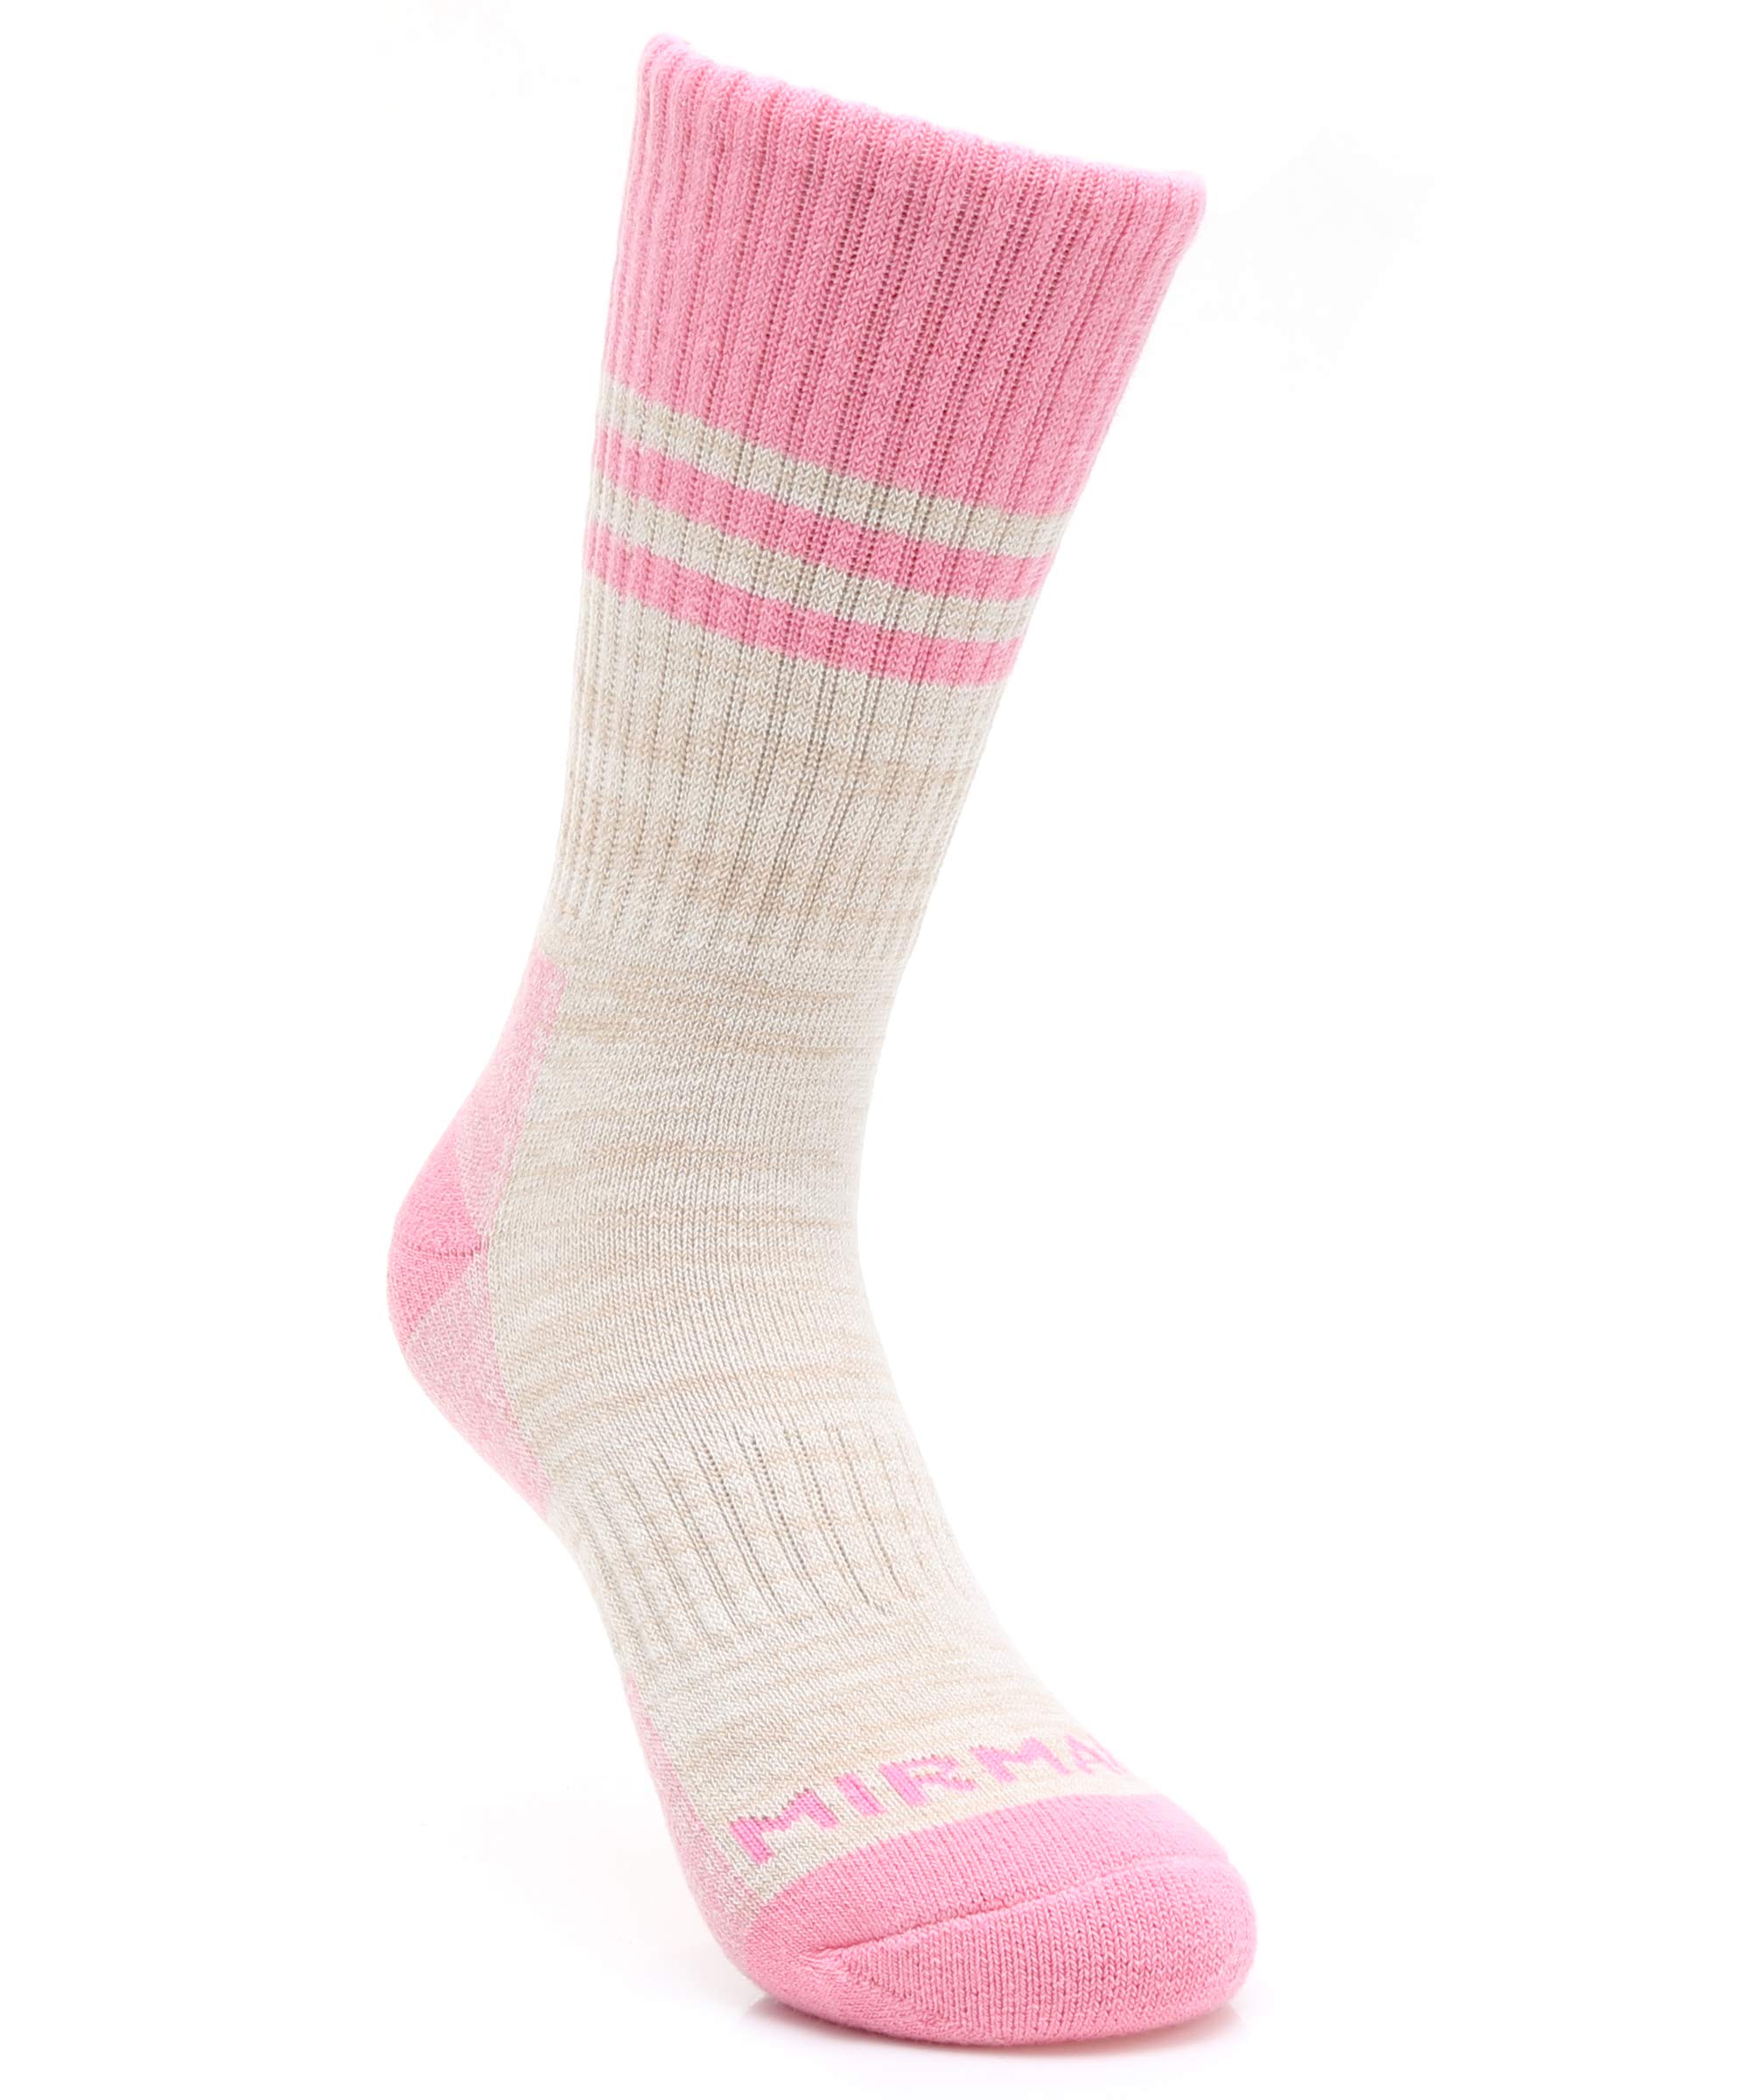 MIRMARU Women’s 5 Pairs Hiking Socks- Moisture Wicking Outdoor Athletic Sports Cushion Crew Socks (M231-MEDIUM)